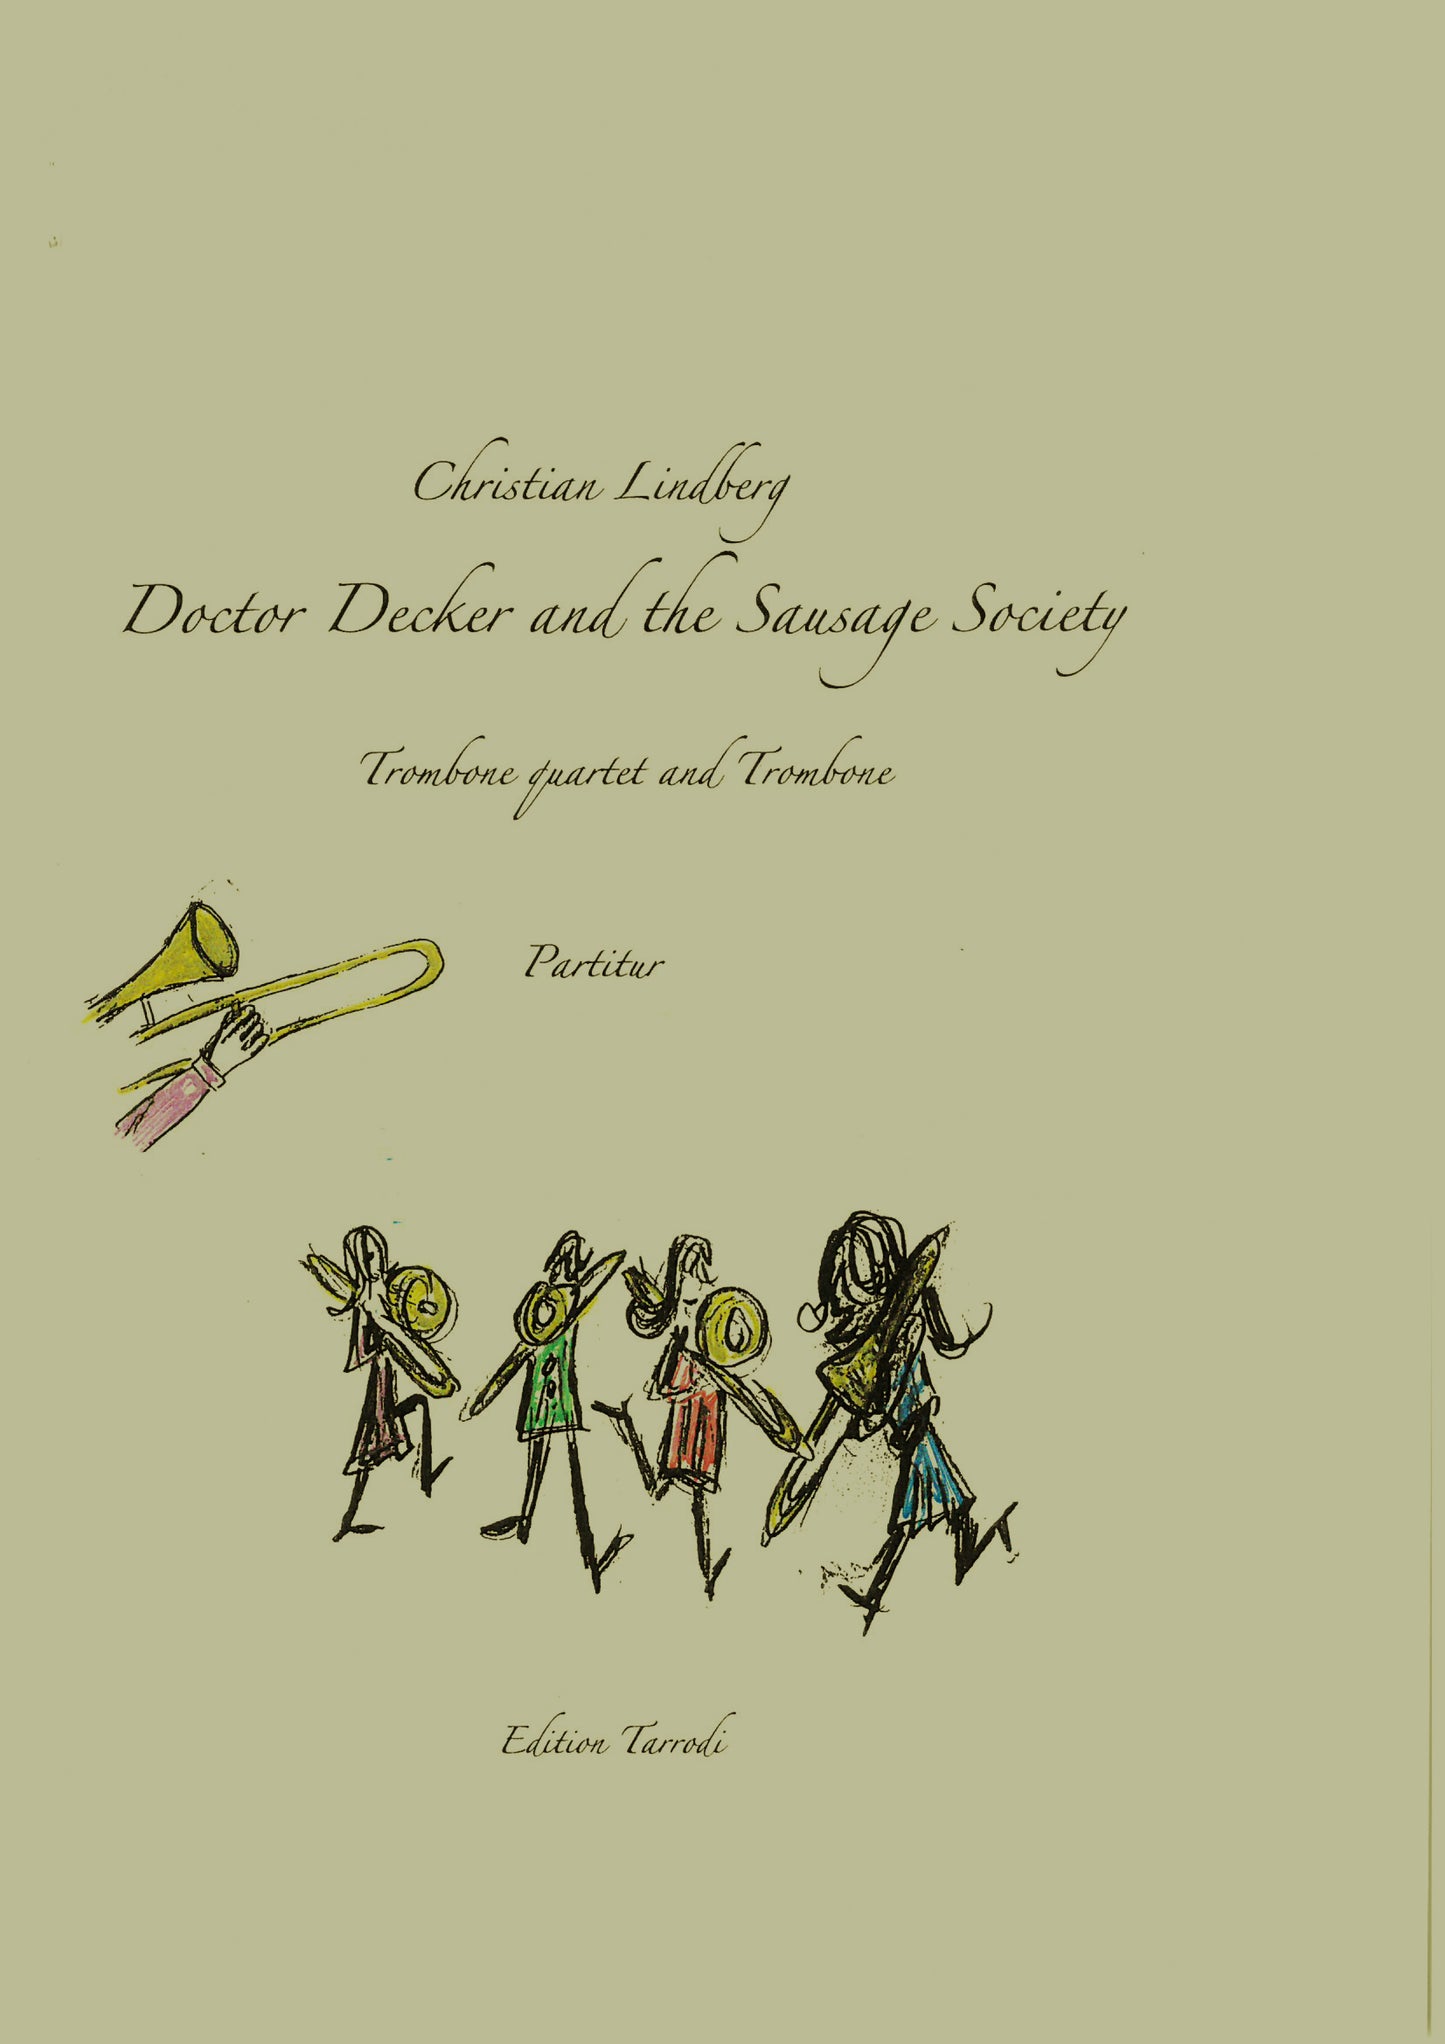 Christian Lindberg - Doctor Decker & The Sausage Society.  Solo Trombone & Trombone quartet